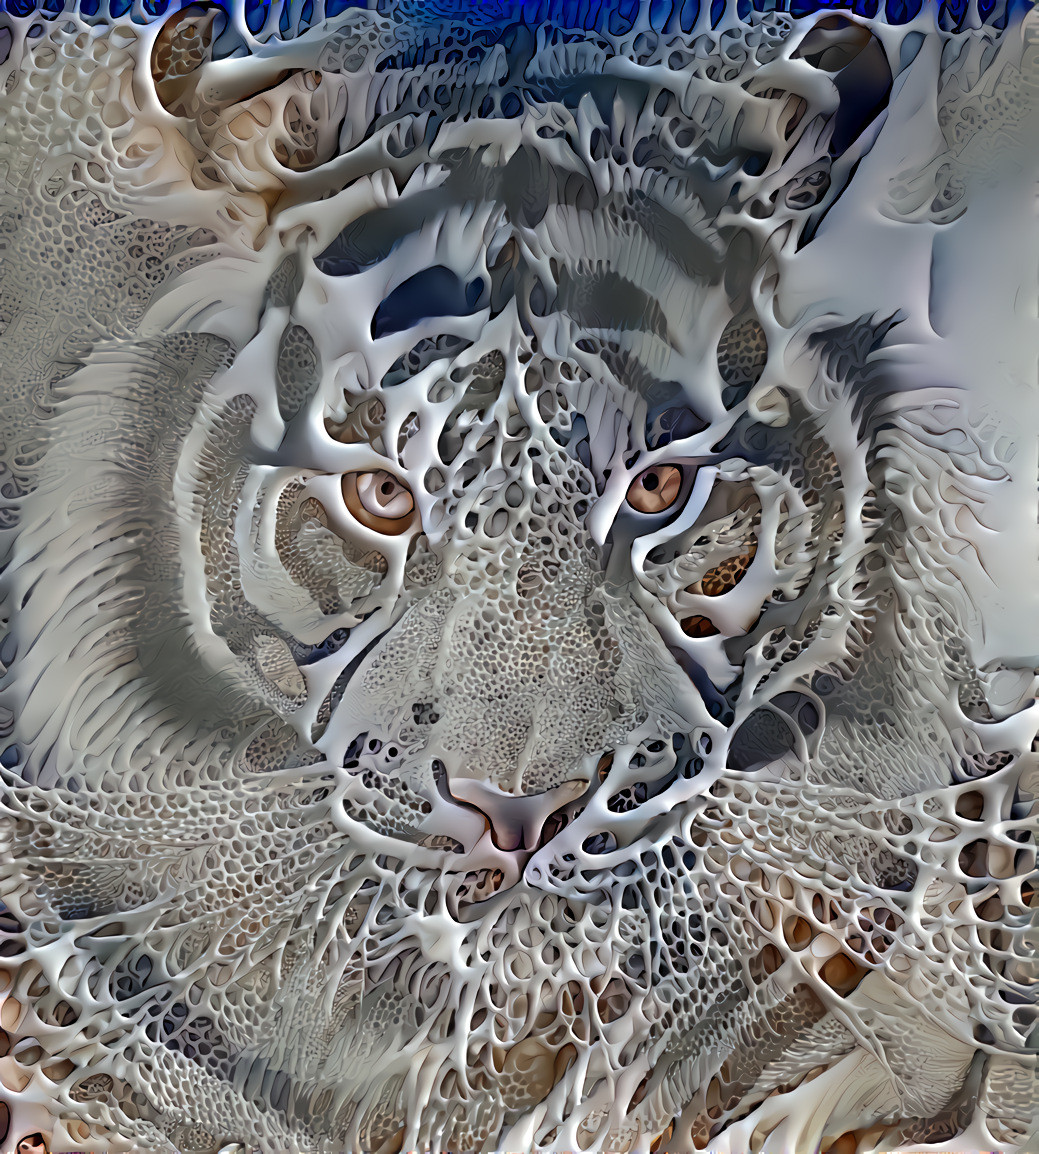 Deep Tiger 12